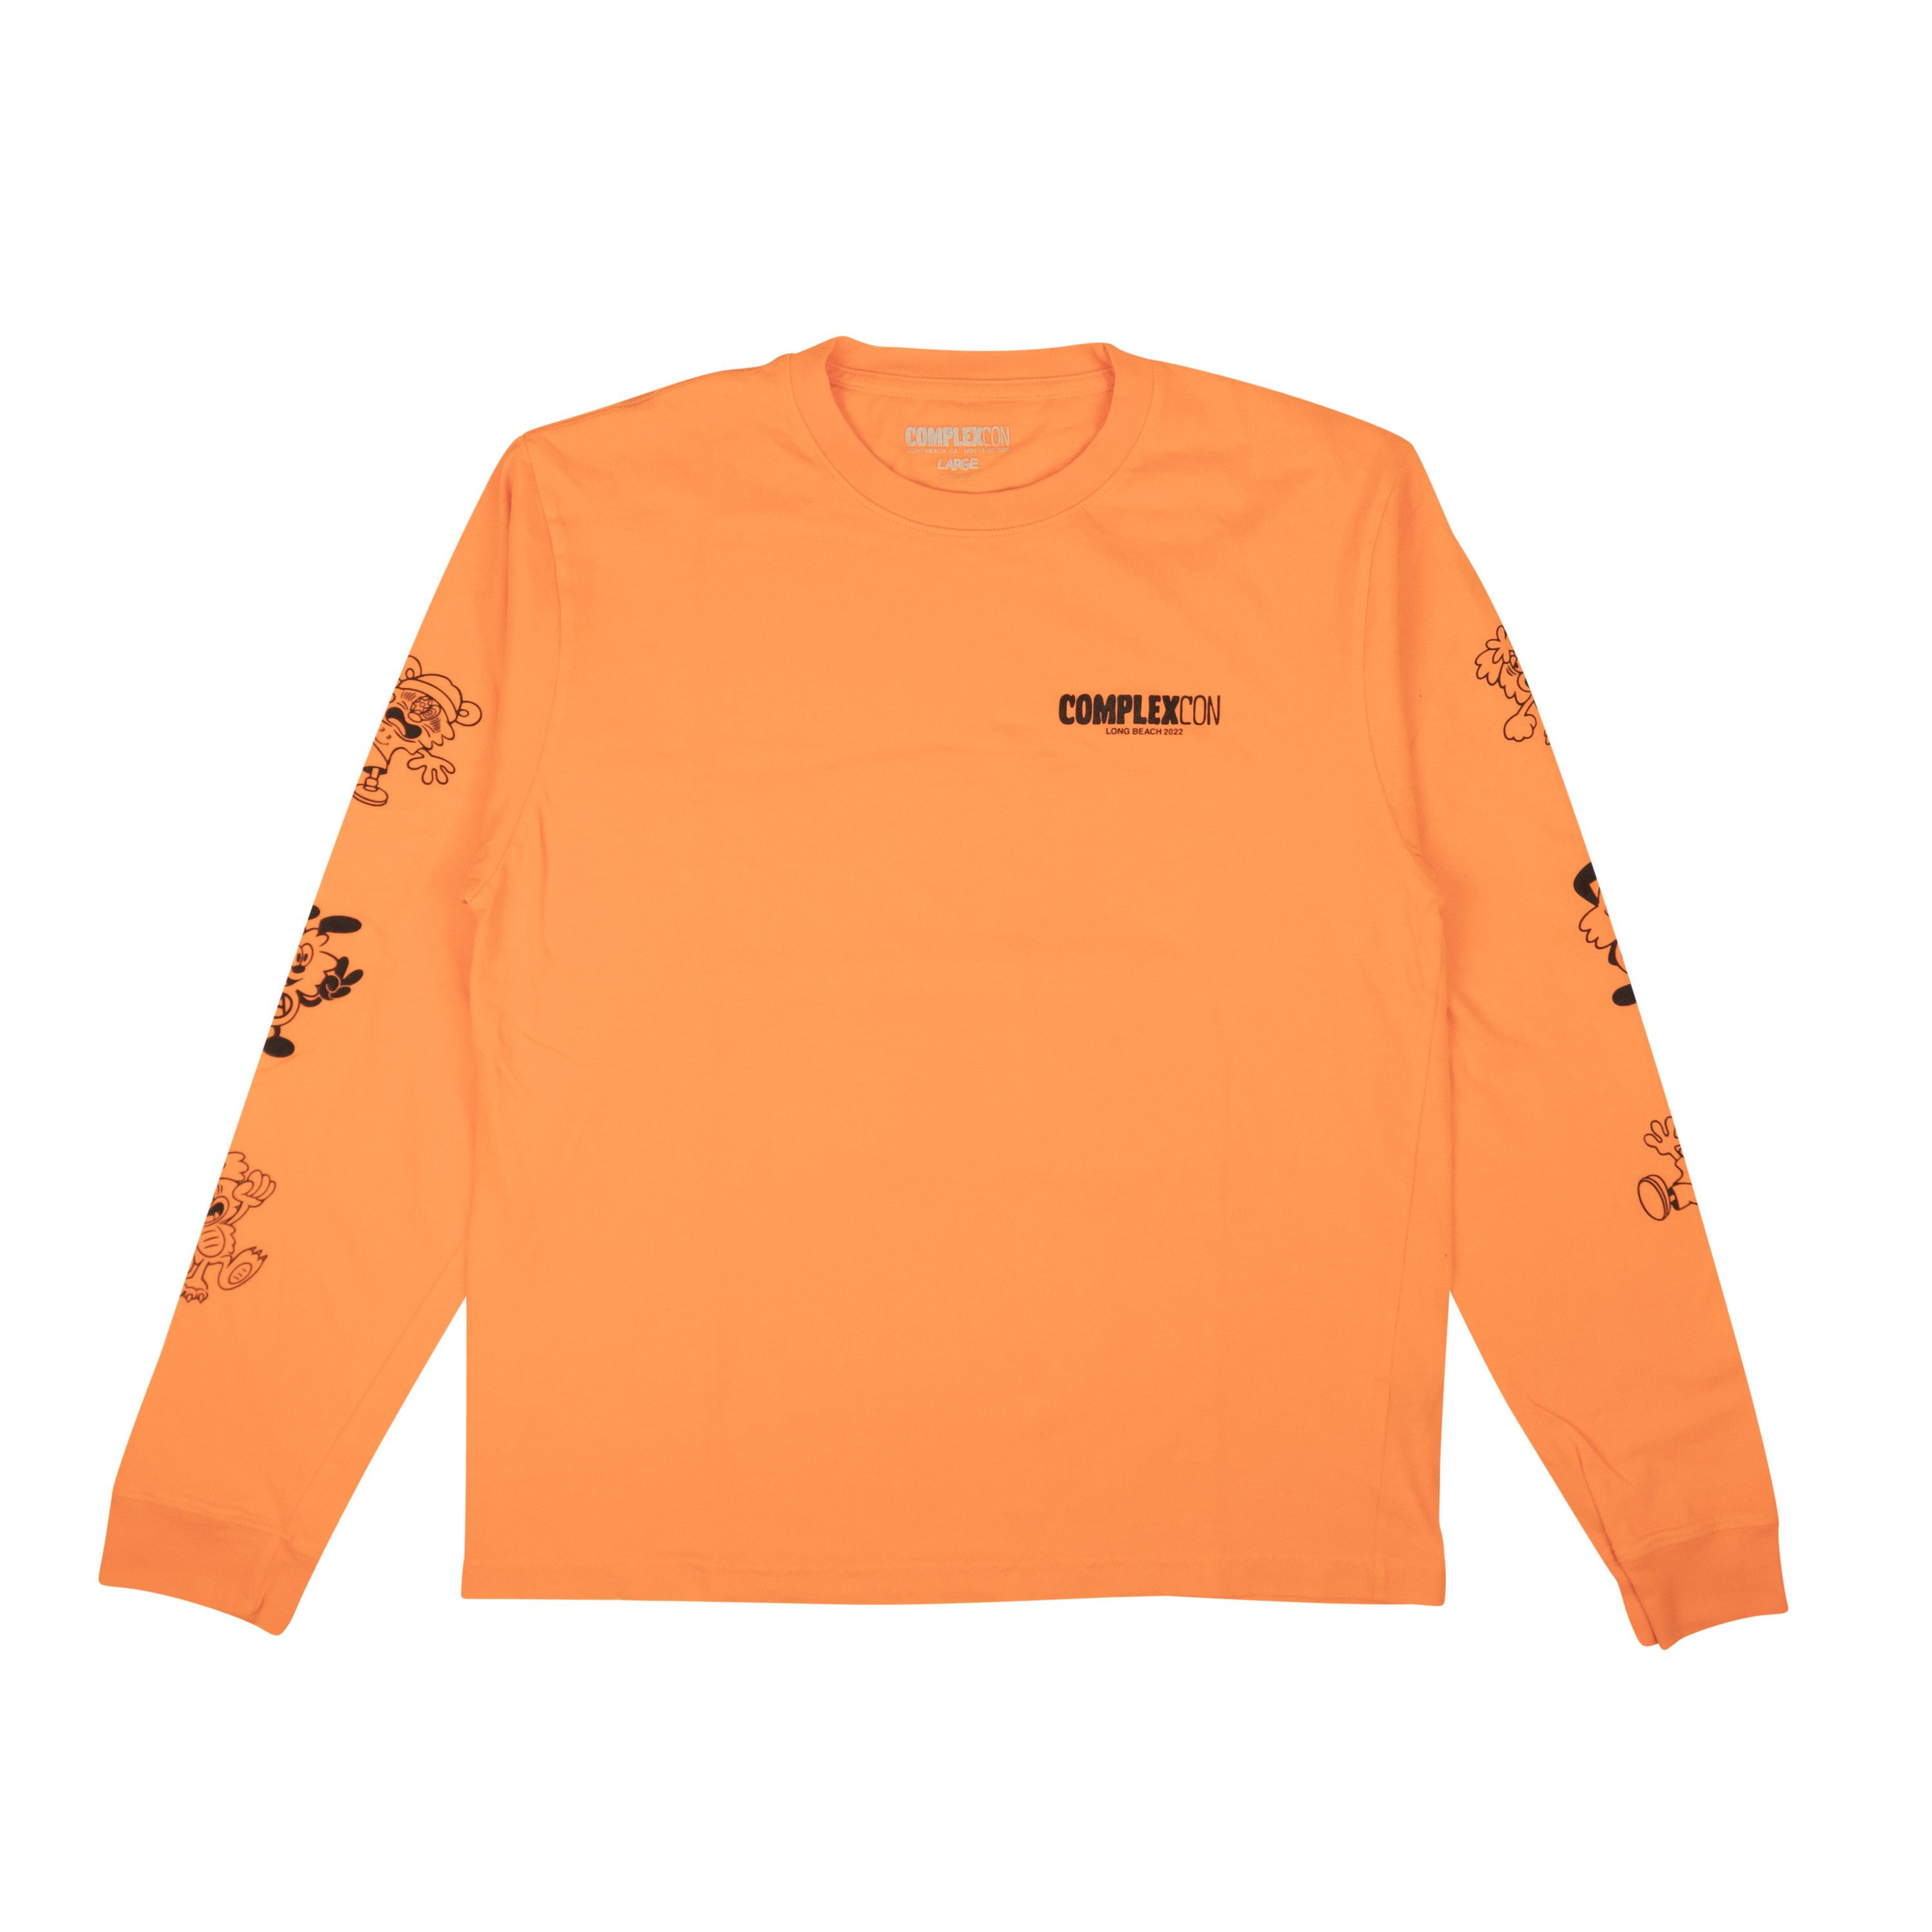 ComplexCon x Verdy Orange Long Sleeve T-Shirt Size S | Grailed